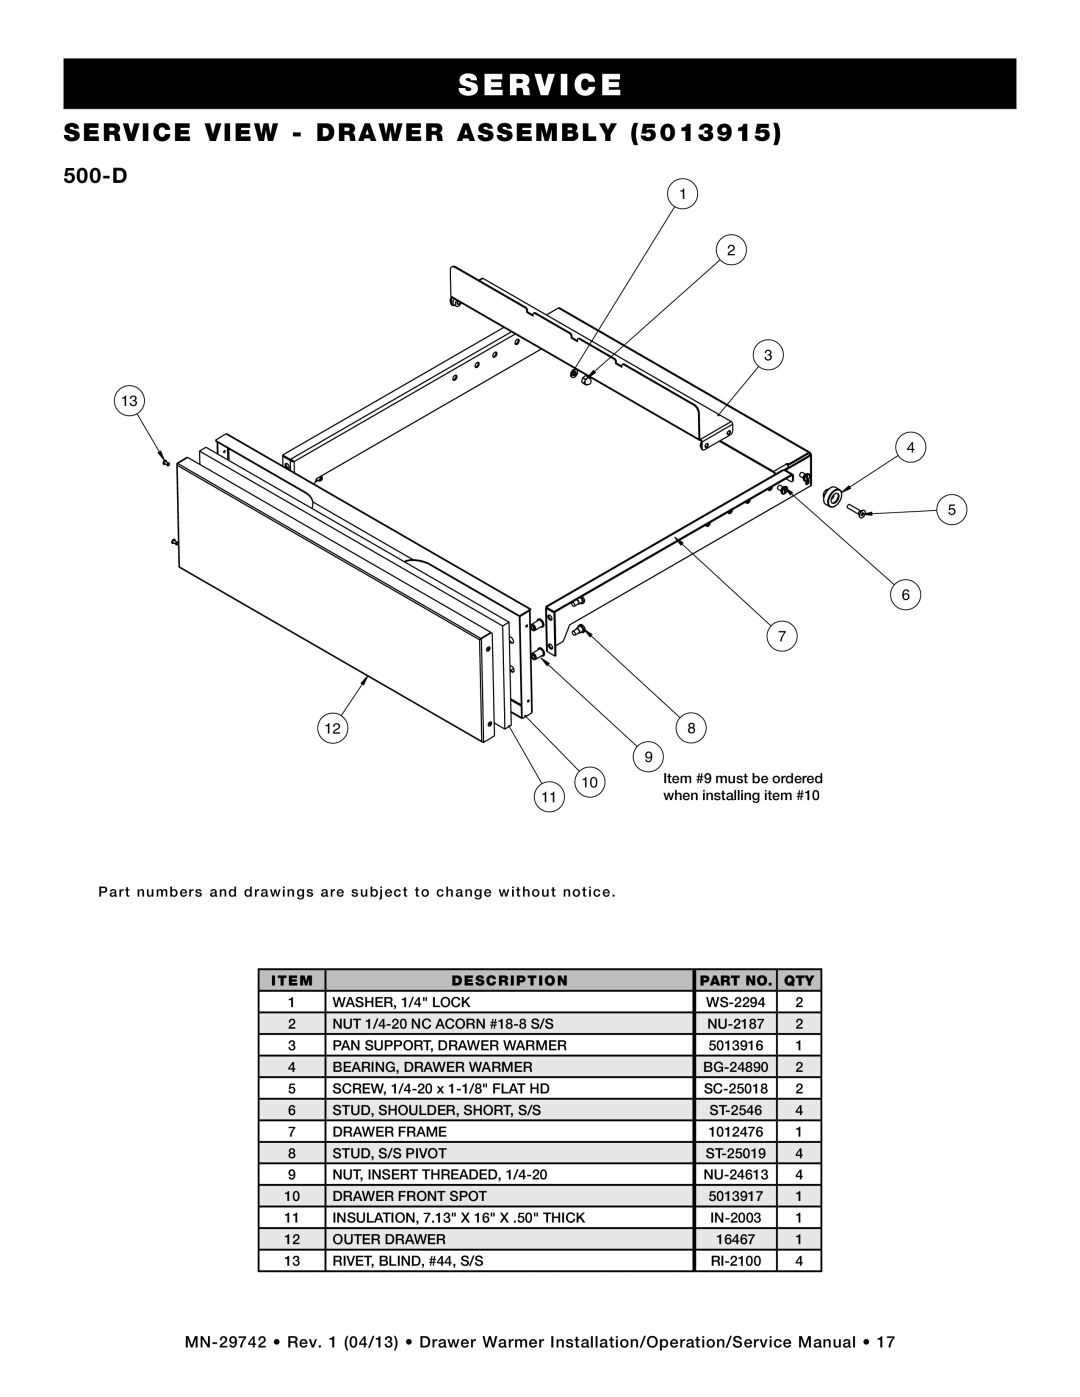 Alto-Shaam 1DN, 500-3D, 3DN, 500-1D, 2DN, 500-2D, drawer warmers service view - drawer assembly, 500-D, S Erv Ice, Description 